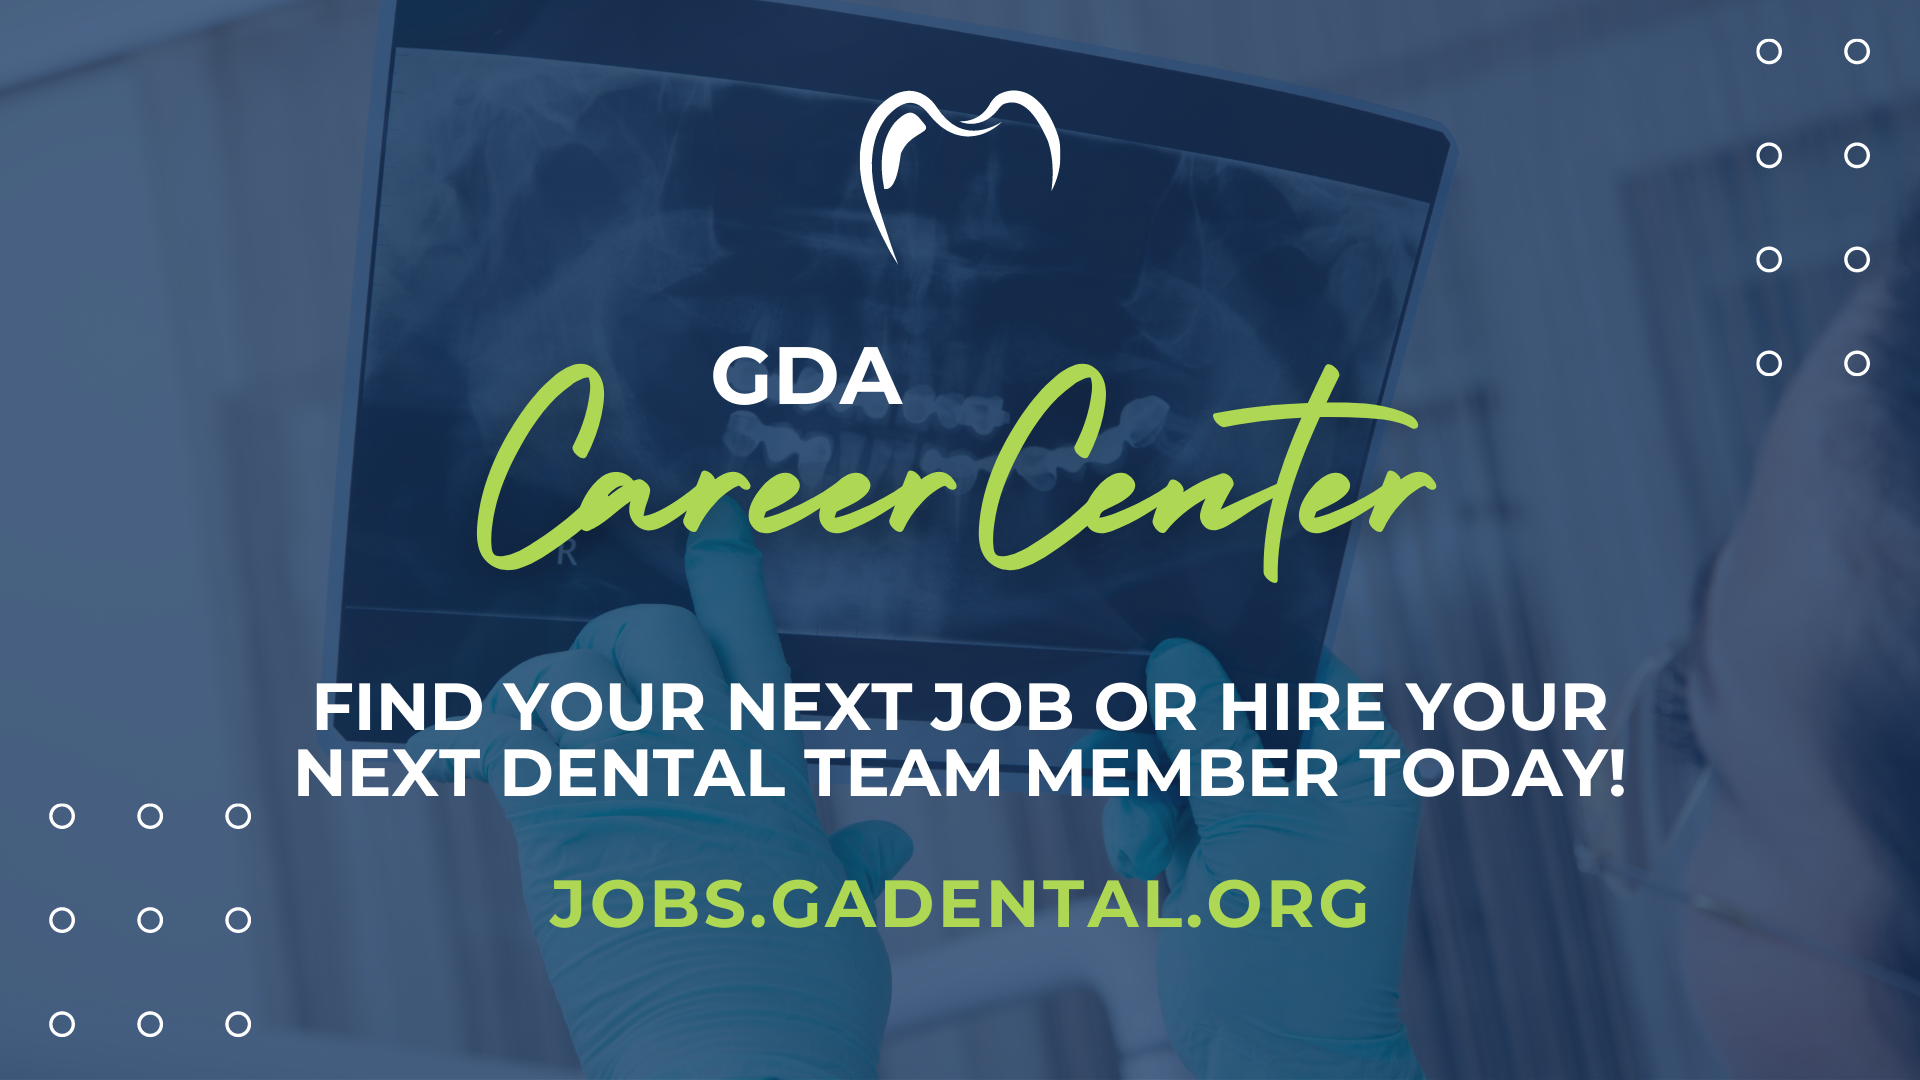 GDA Career Center